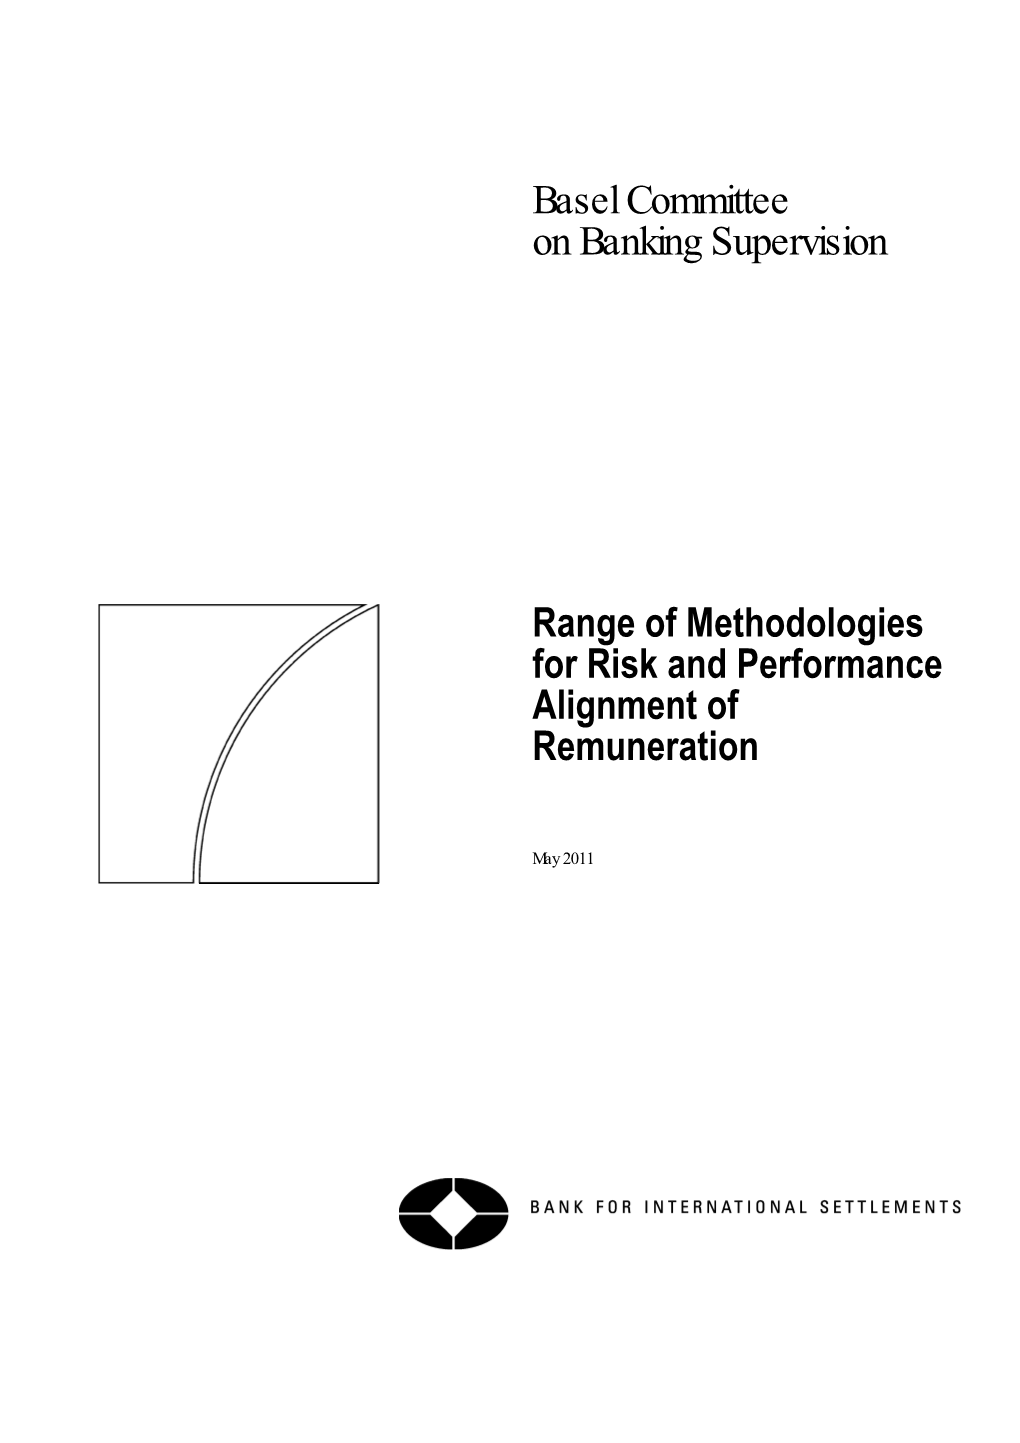 Range of Methodologies for Risk and Performance Alignment of Remuneration